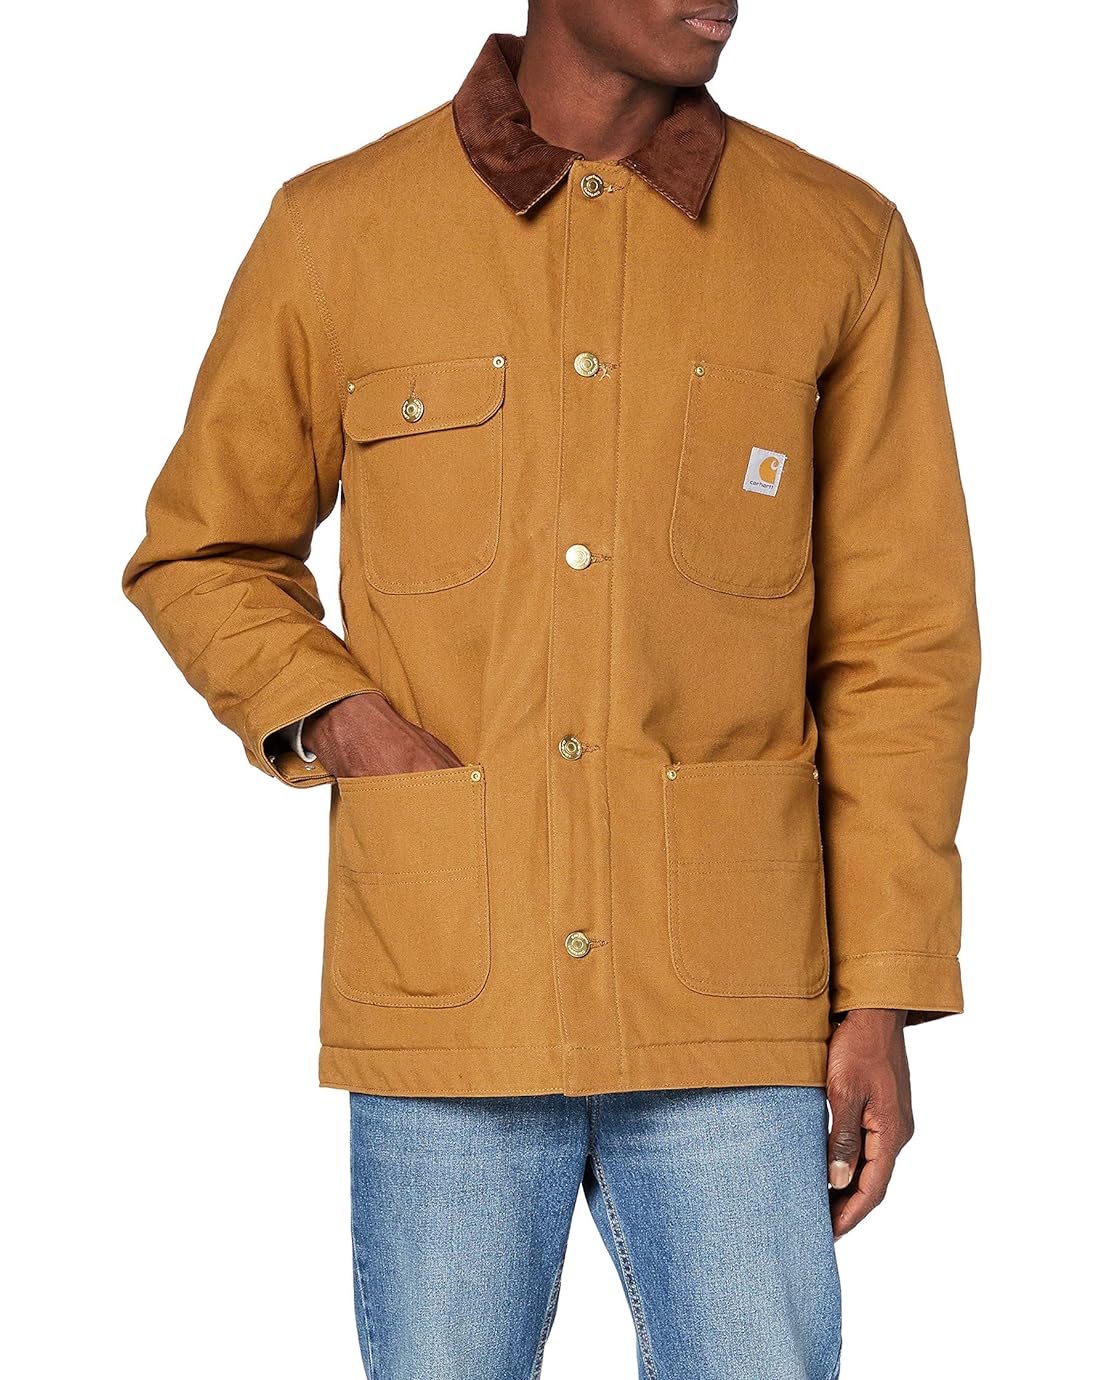 Carhartt Mens Duck Chore Jacket C001 (Regular and Big & Tall Sizes)